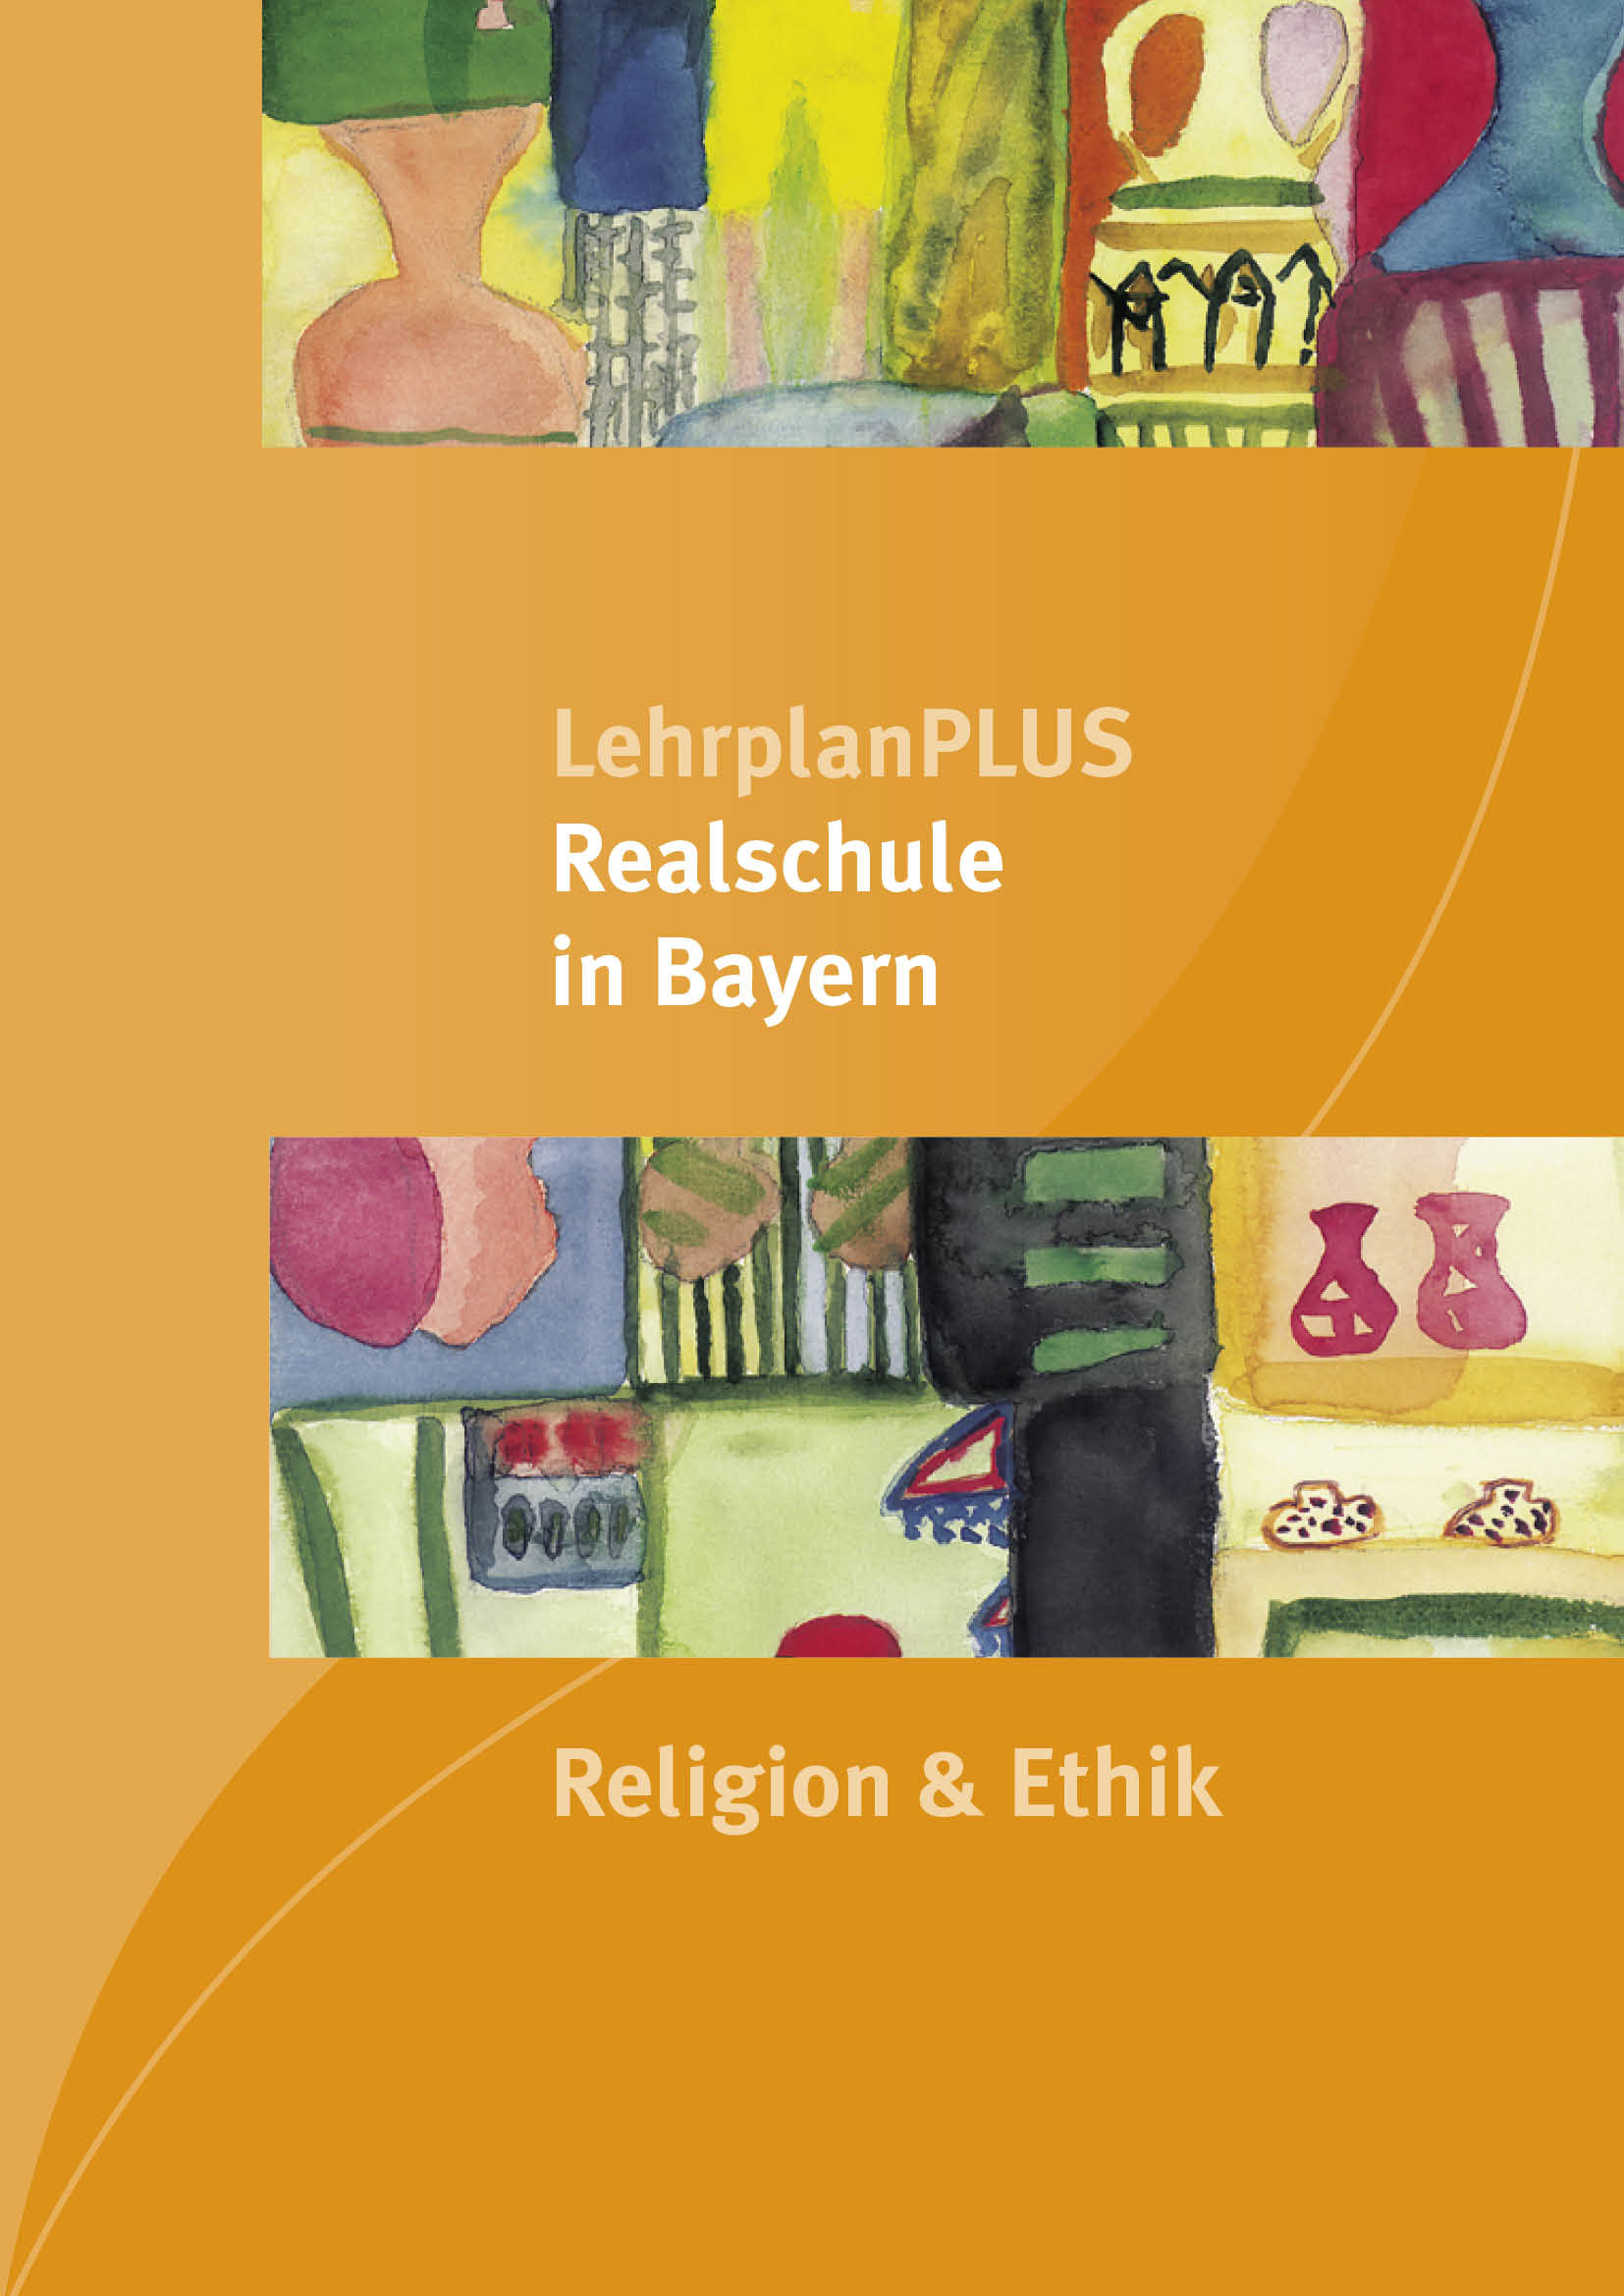 LehrplanPLUS Realschule in Bayern - Religion & Ethik